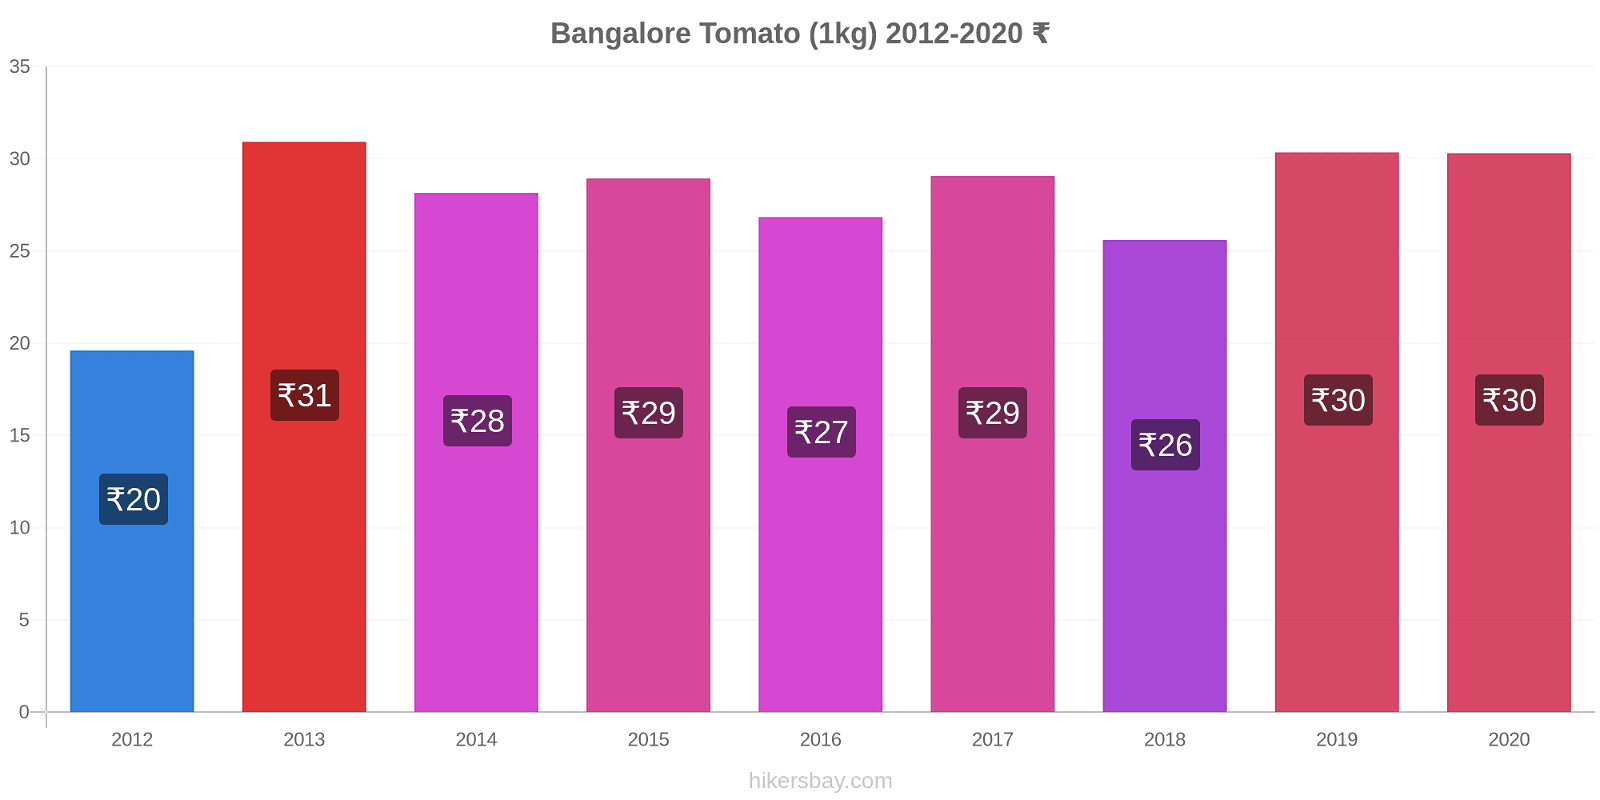 Bangalore price changes Tomato (1kg) hikersbay.com